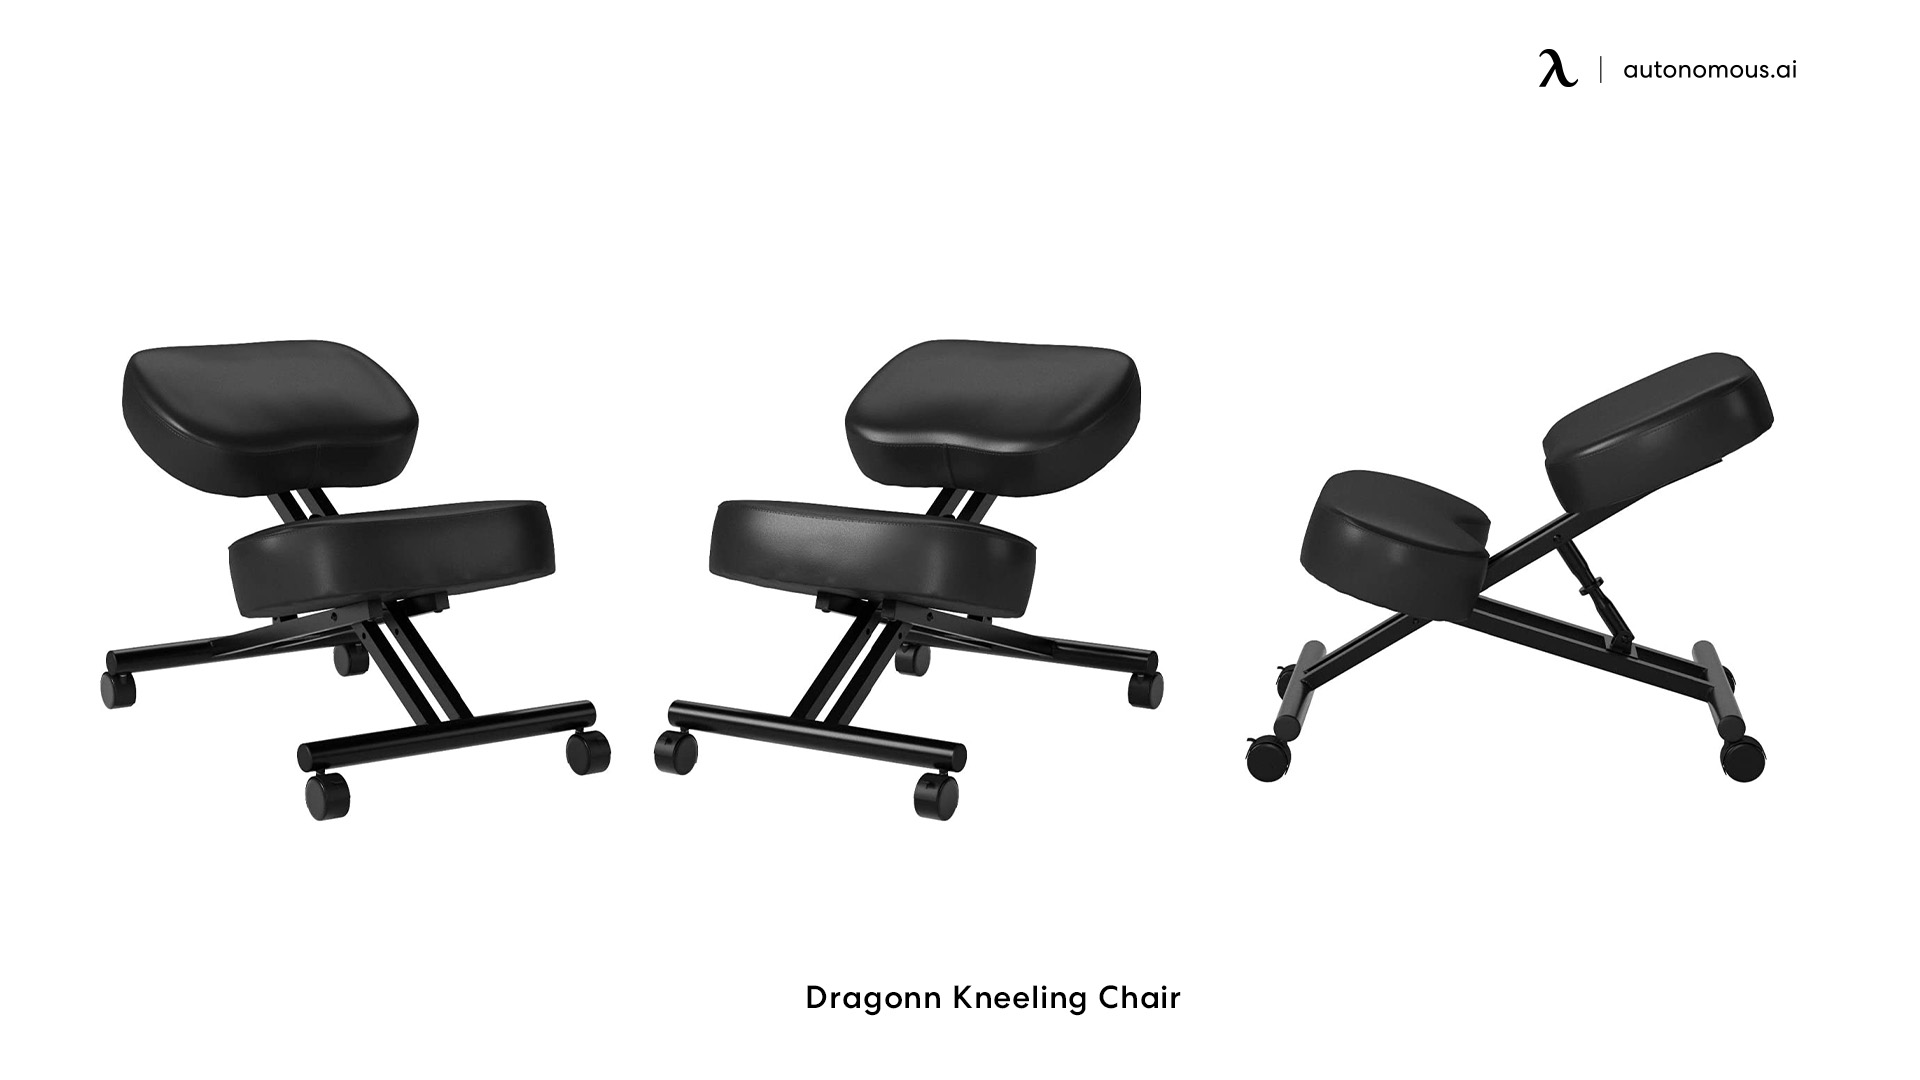 Dragonn Kneeling Chair